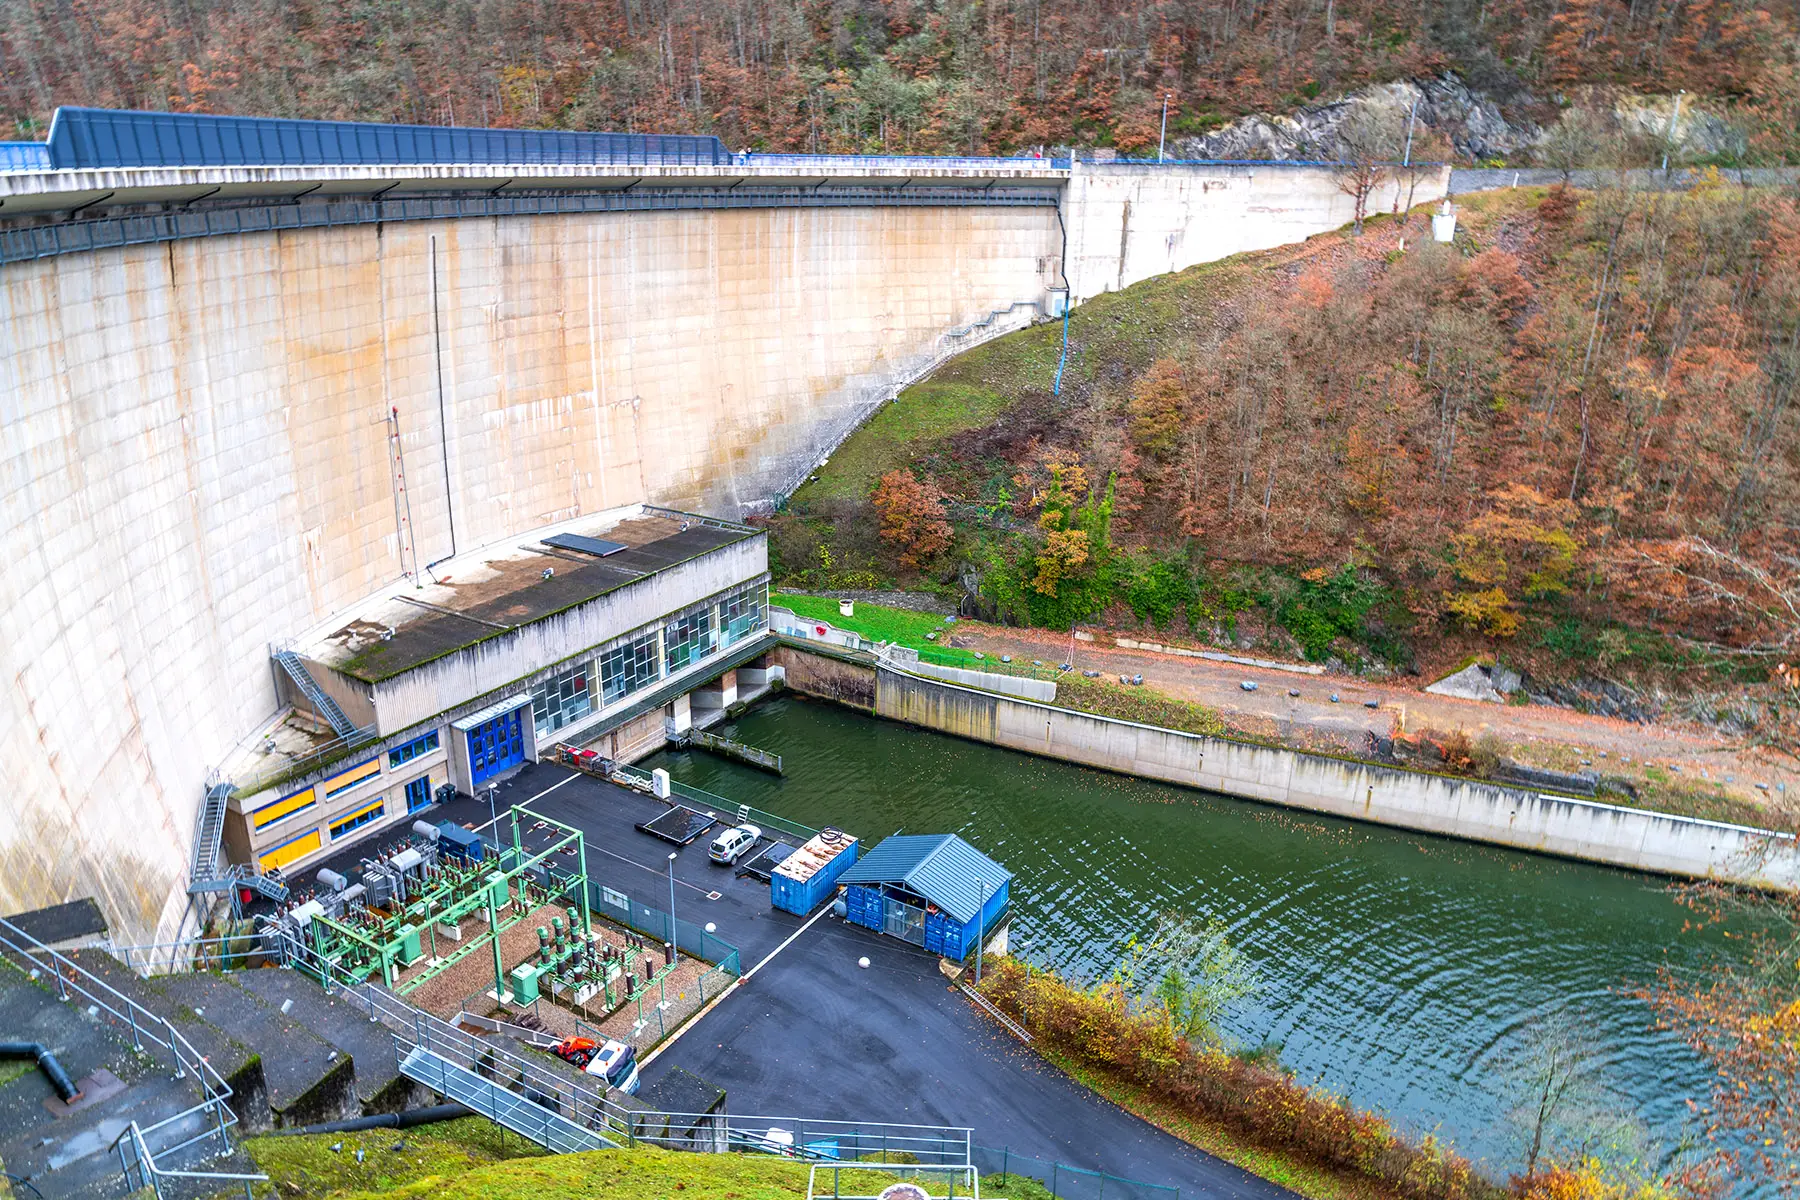 Esch-sur-Sûre Hydroelectric Dam in Luxembourg